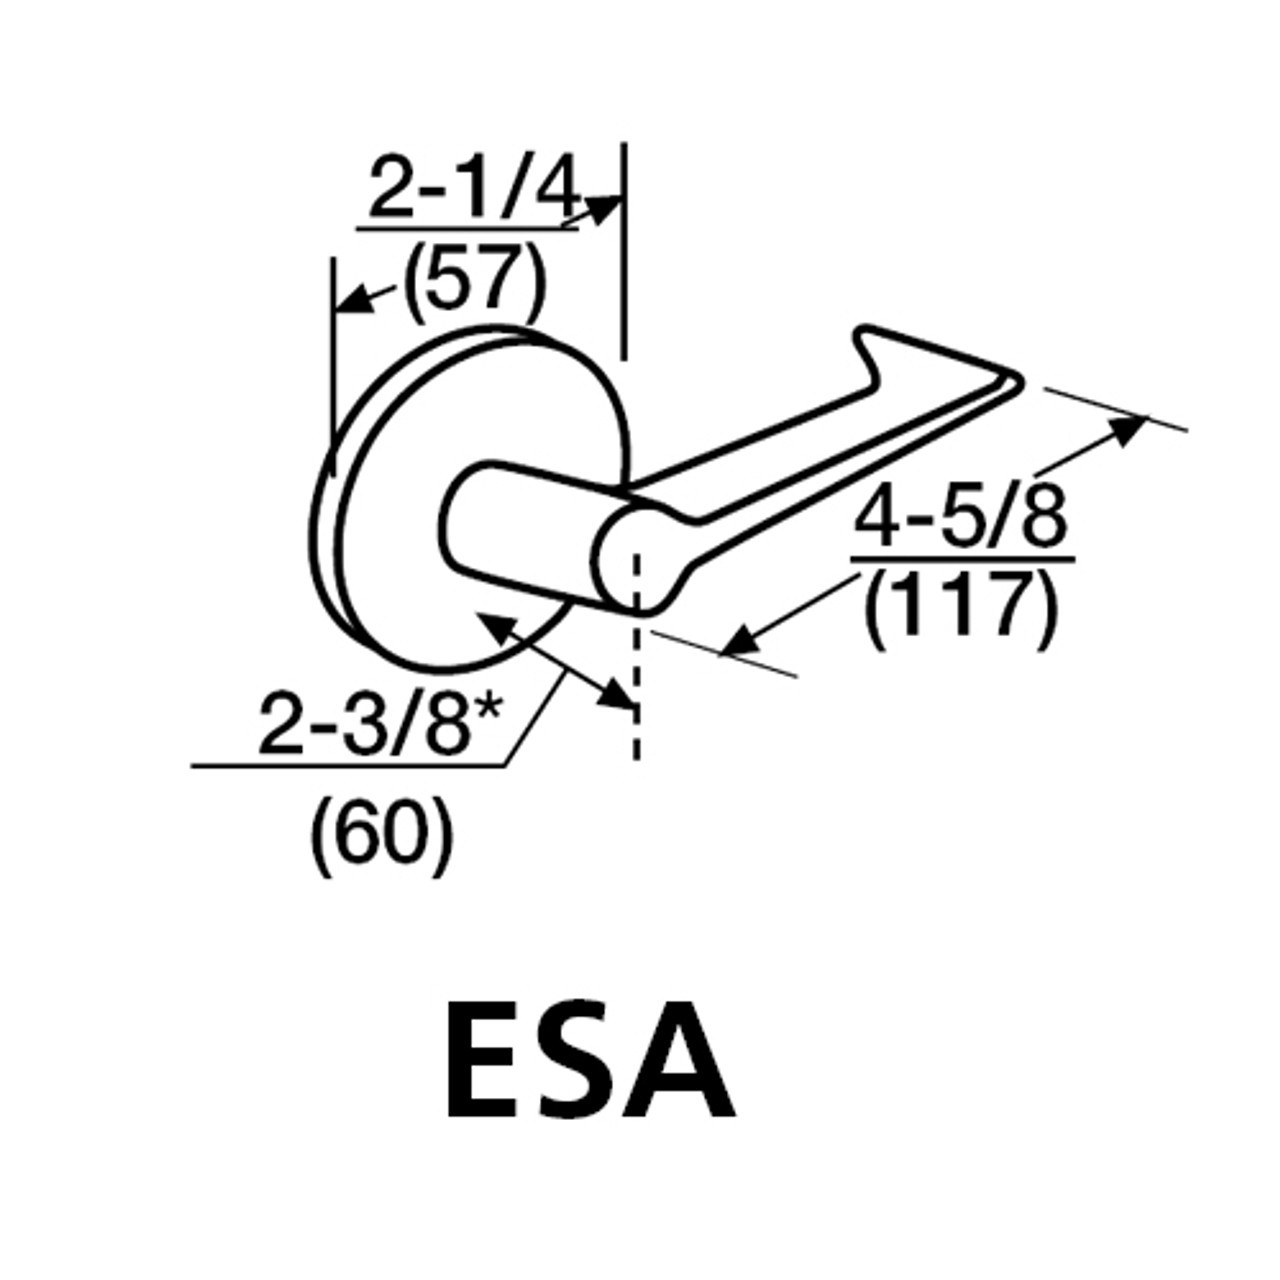 ML2030-ESA-605-M31 Corbin Russwin ML2000 Series Mortise Privacy Locksets with Essex Lever in Bright Brass